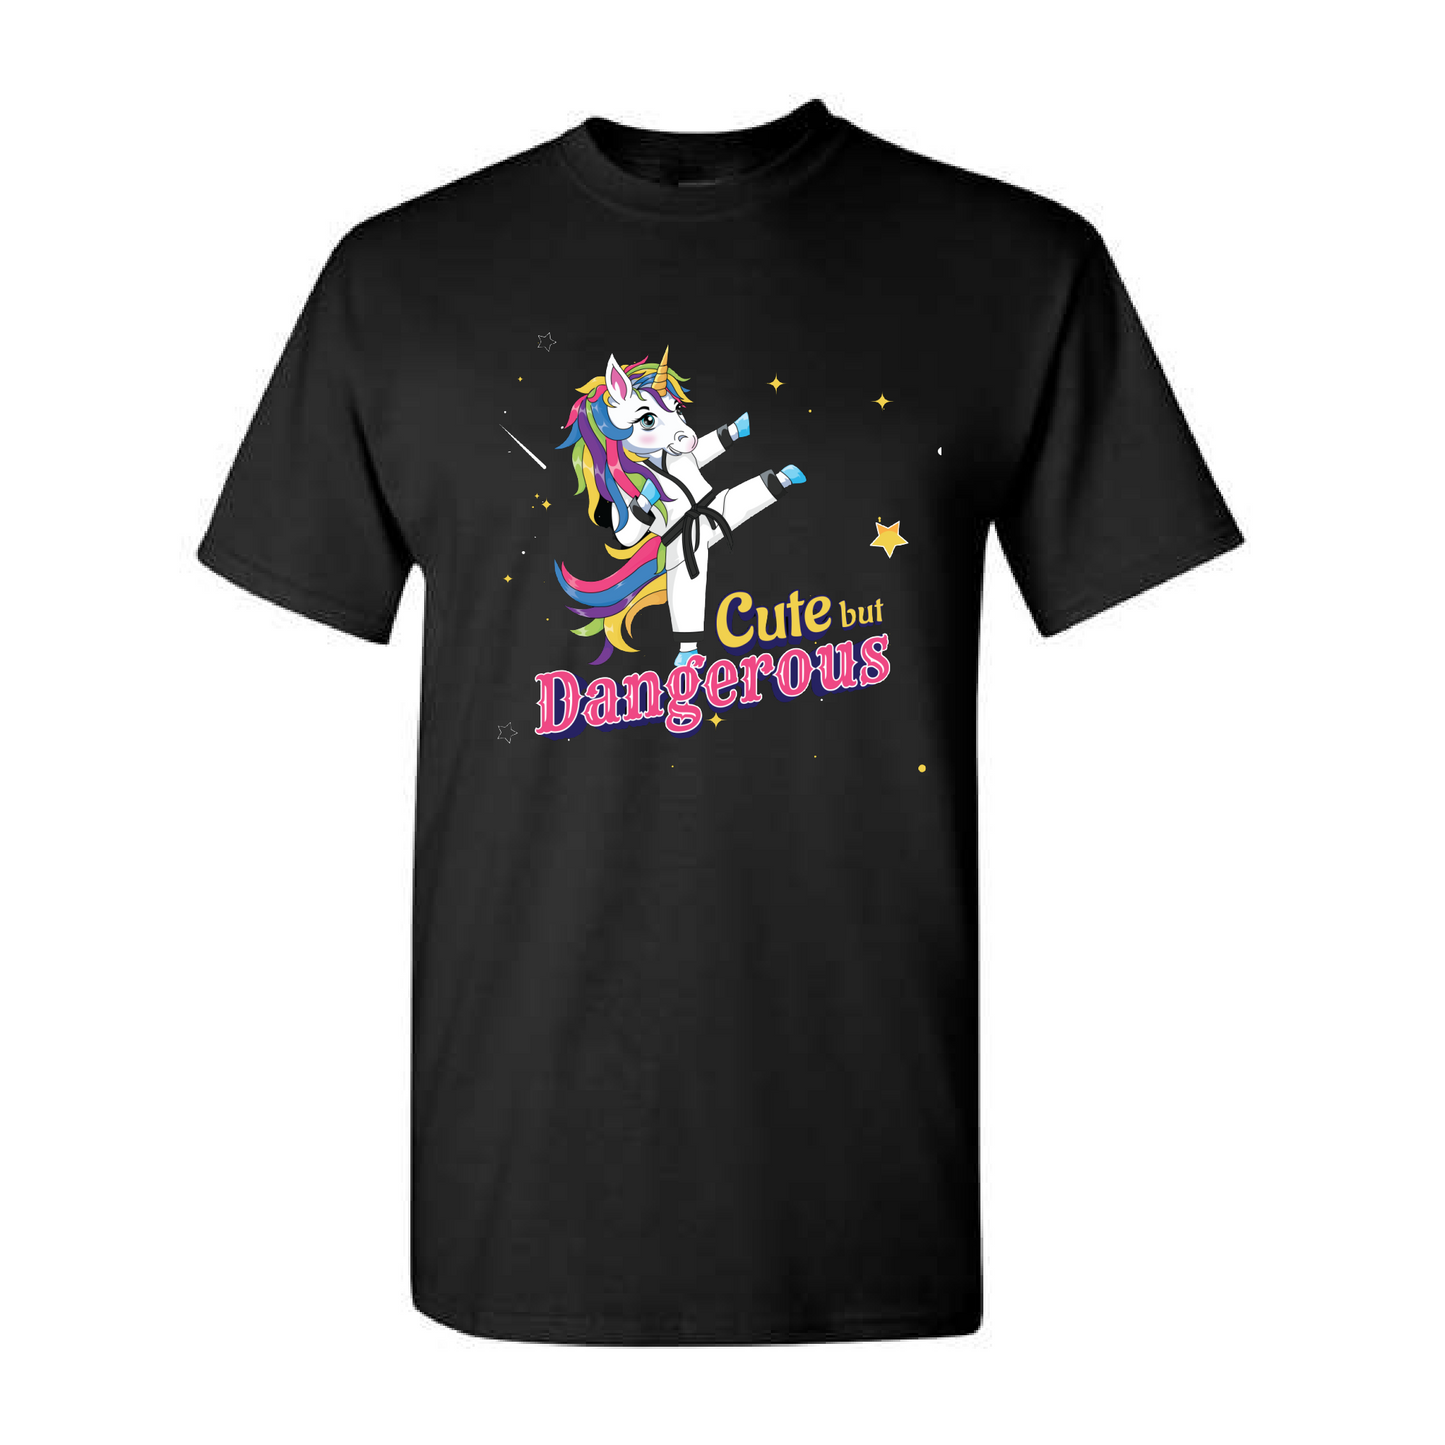 "Cute but Dangerous" T-Shirt